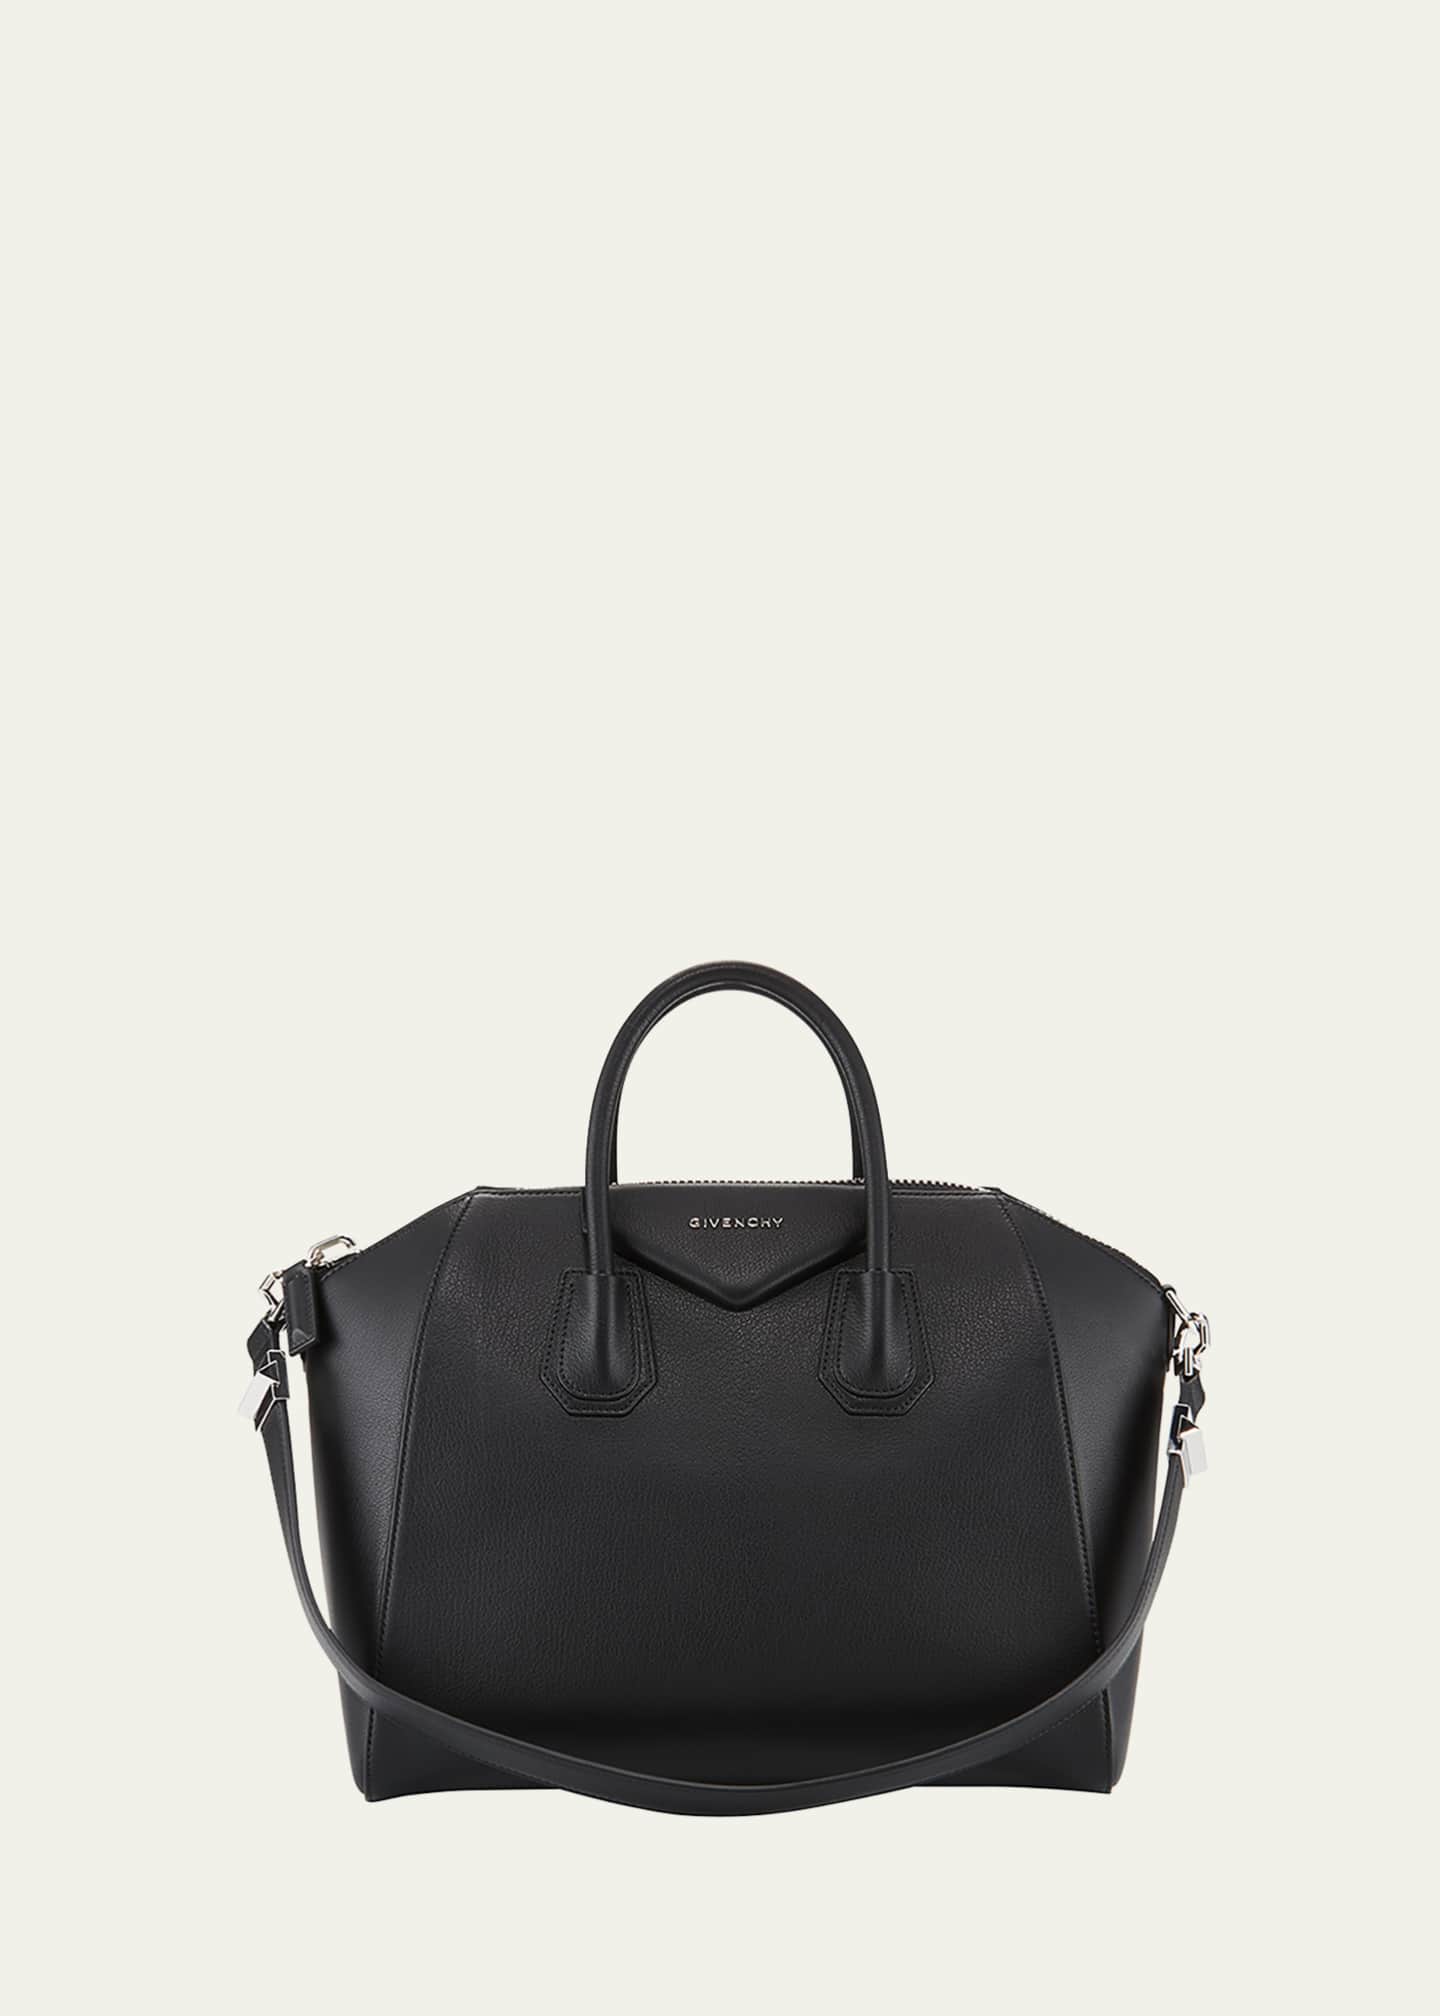 Givenchy Antigona Large Bag